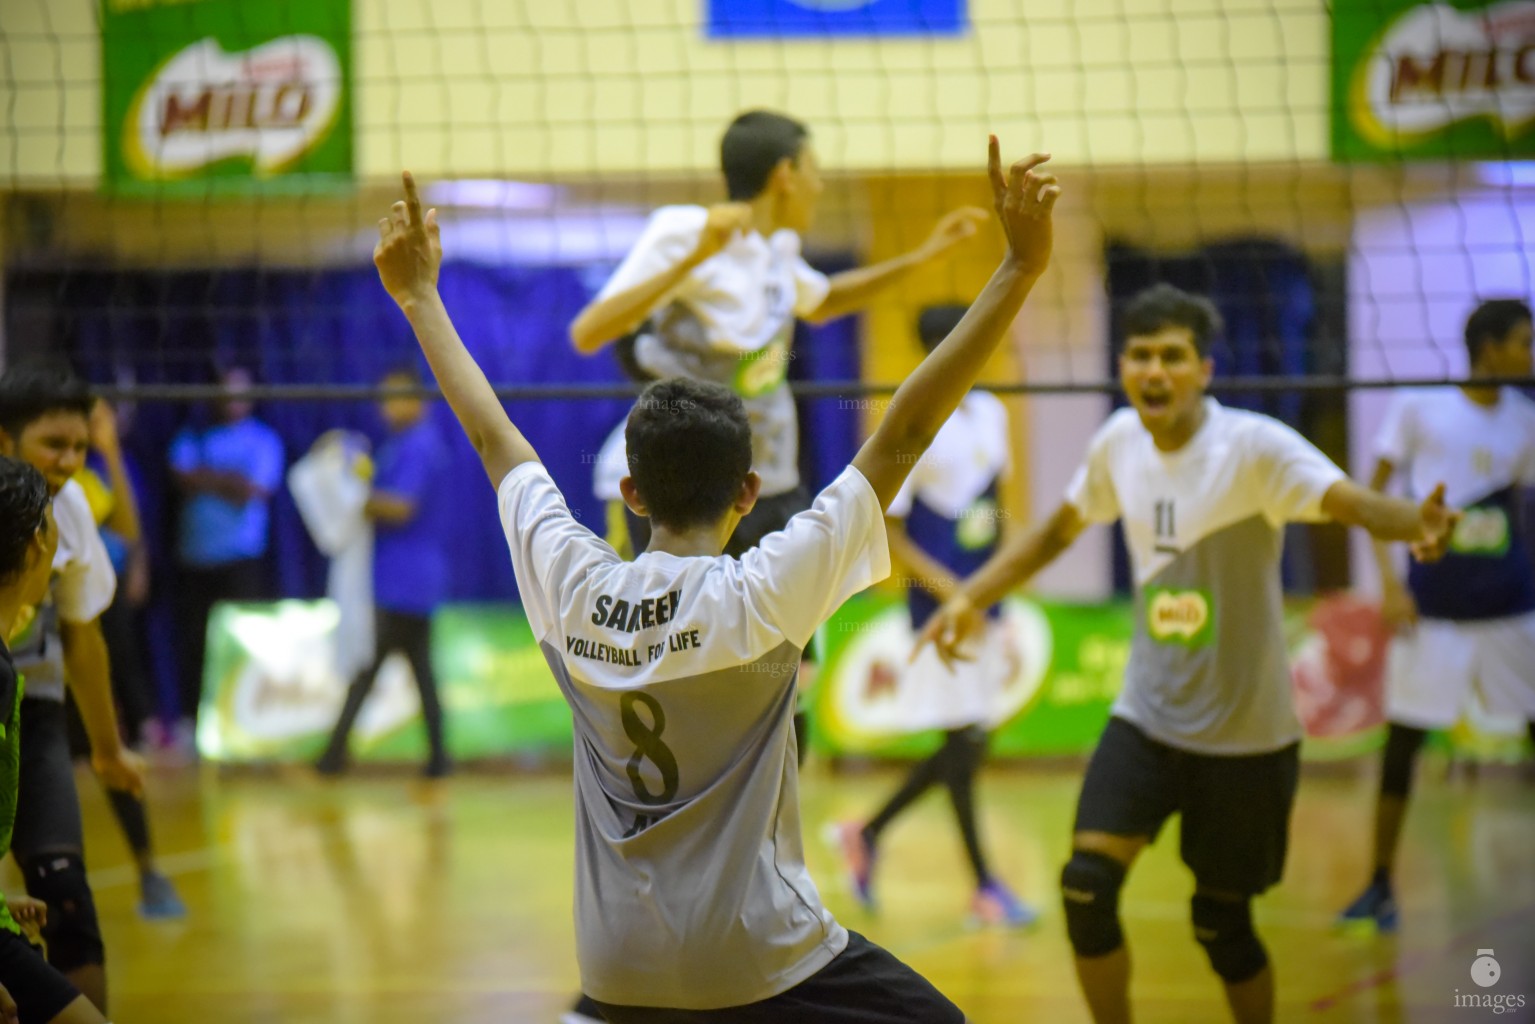 Milo Inter-School Volleyball Tournament (U-19 Boys Final) CHSE vs ahmadhiyya international school (Photos: Mohamed Sharuhaan / image.mv)